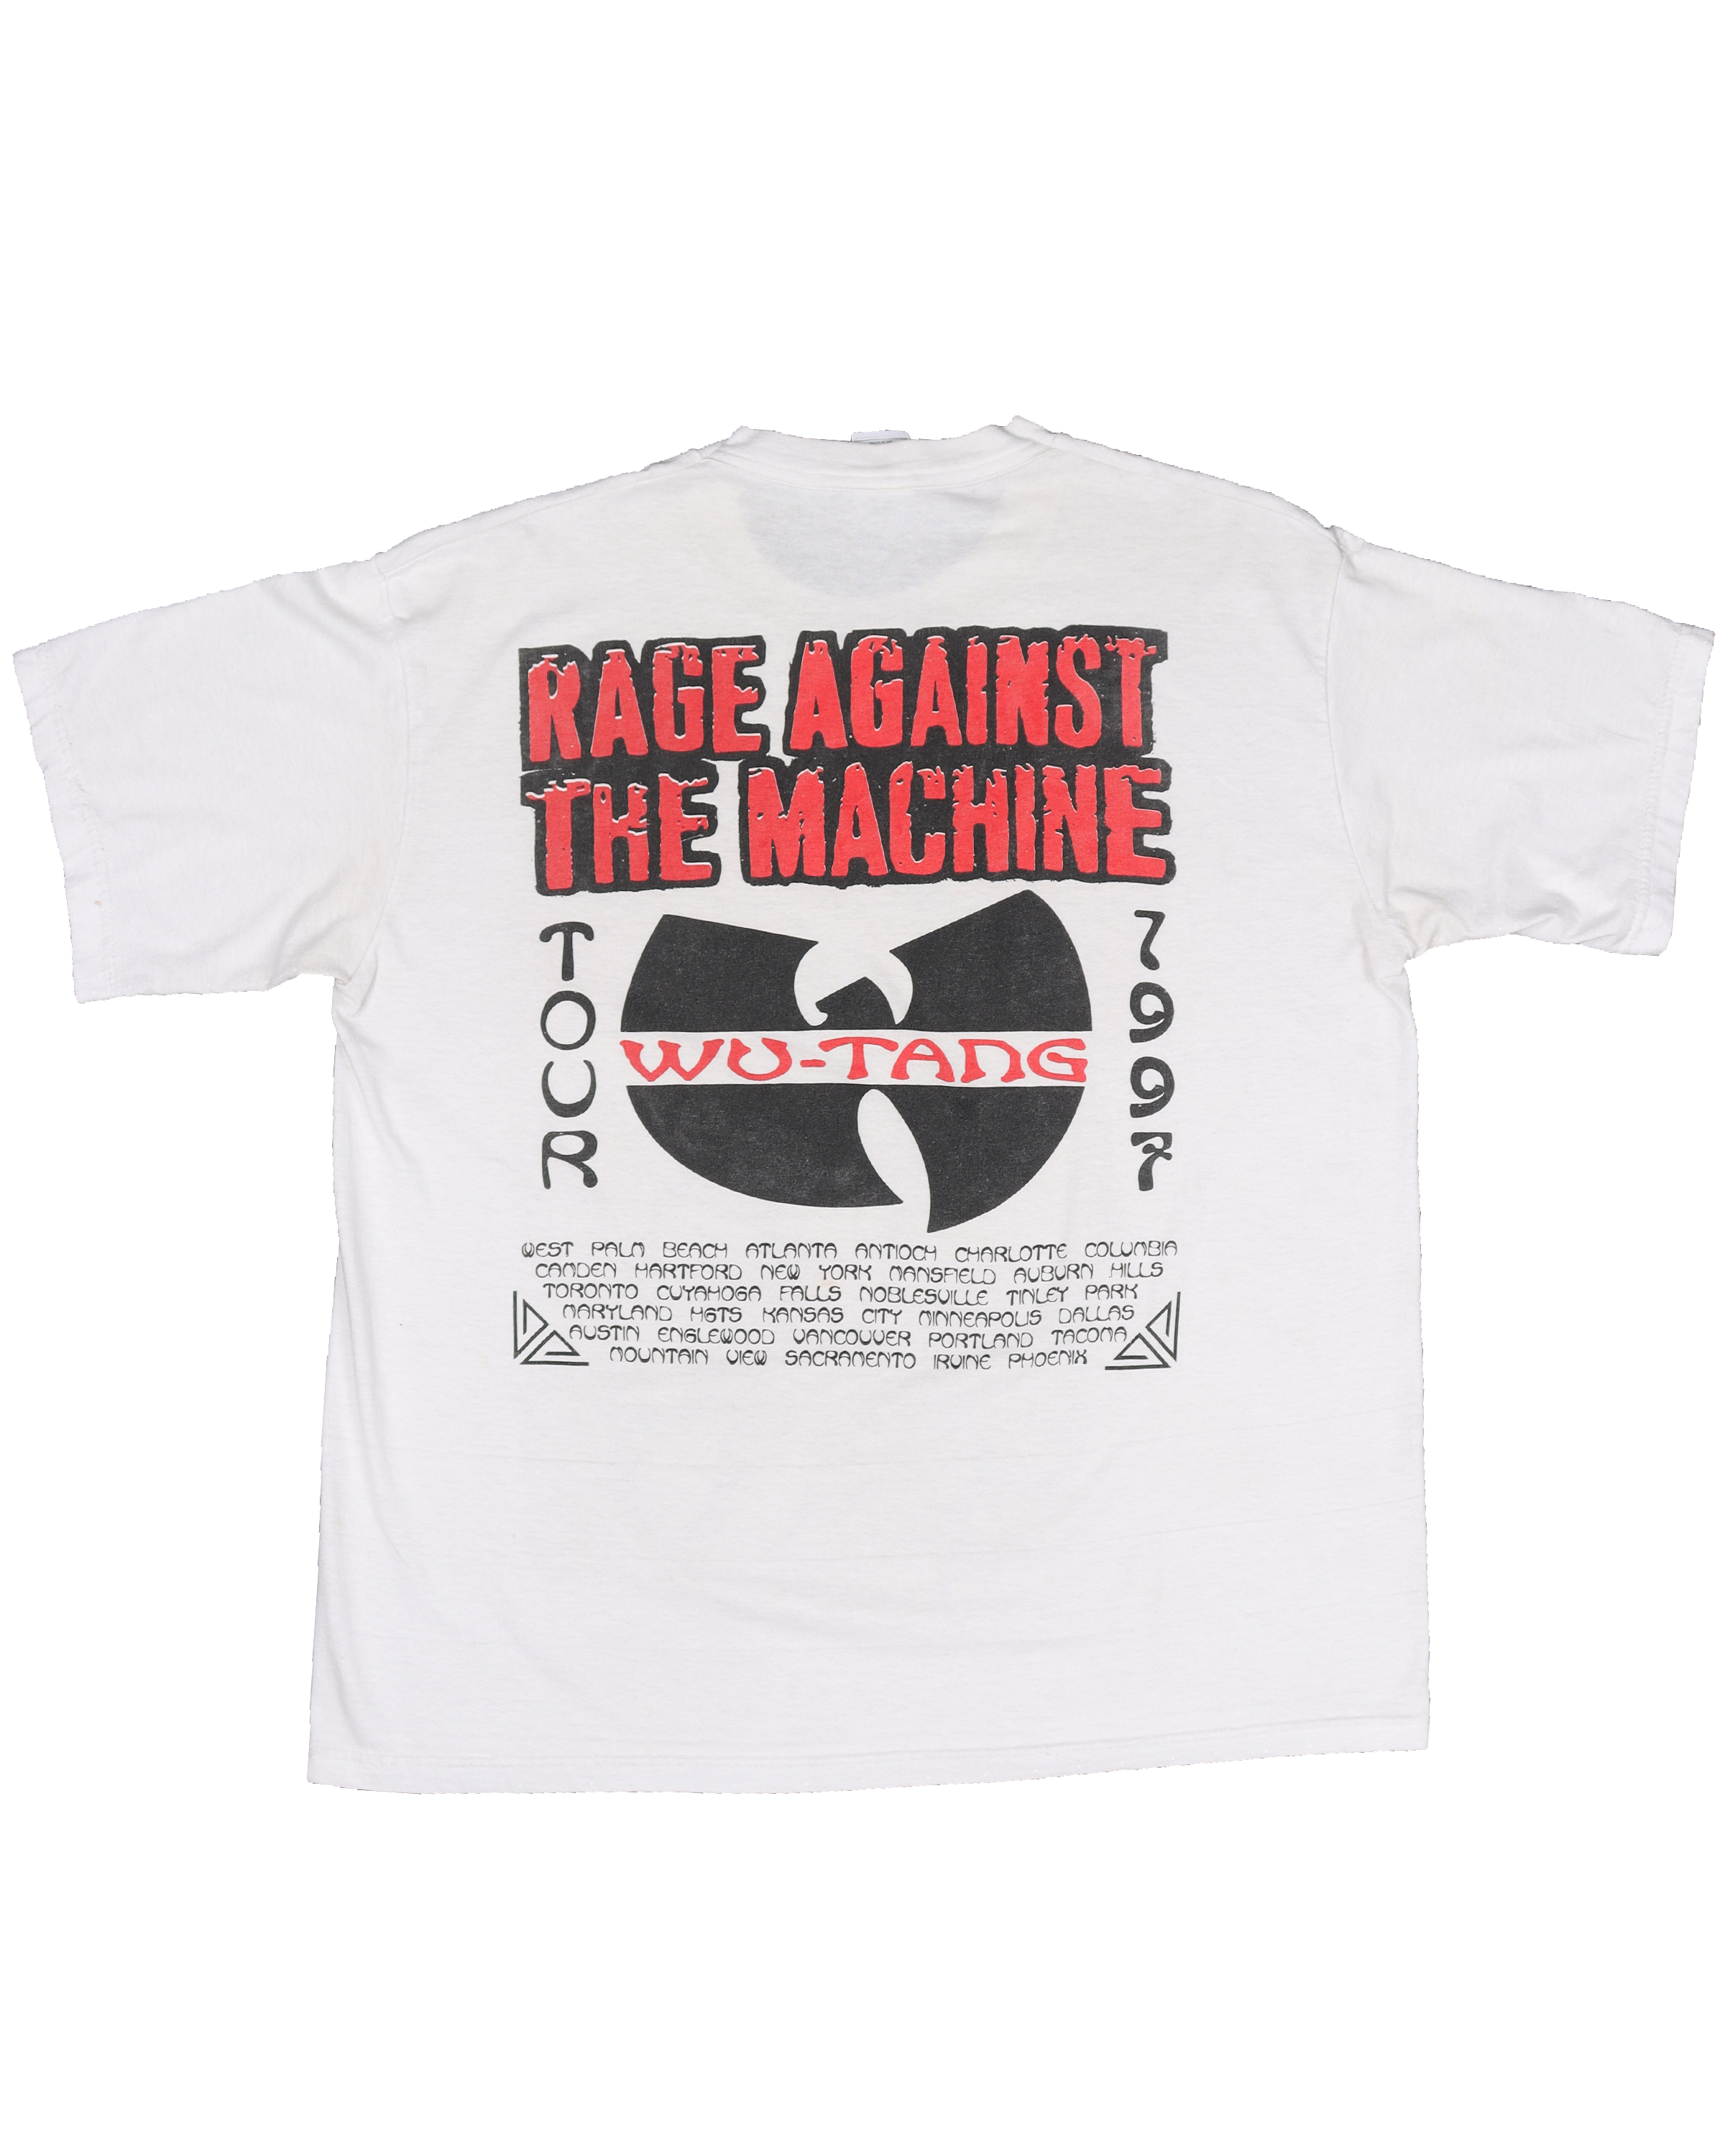 Wu-Tang Clan Rage Against the Machine 1997 Tour T-Shirt